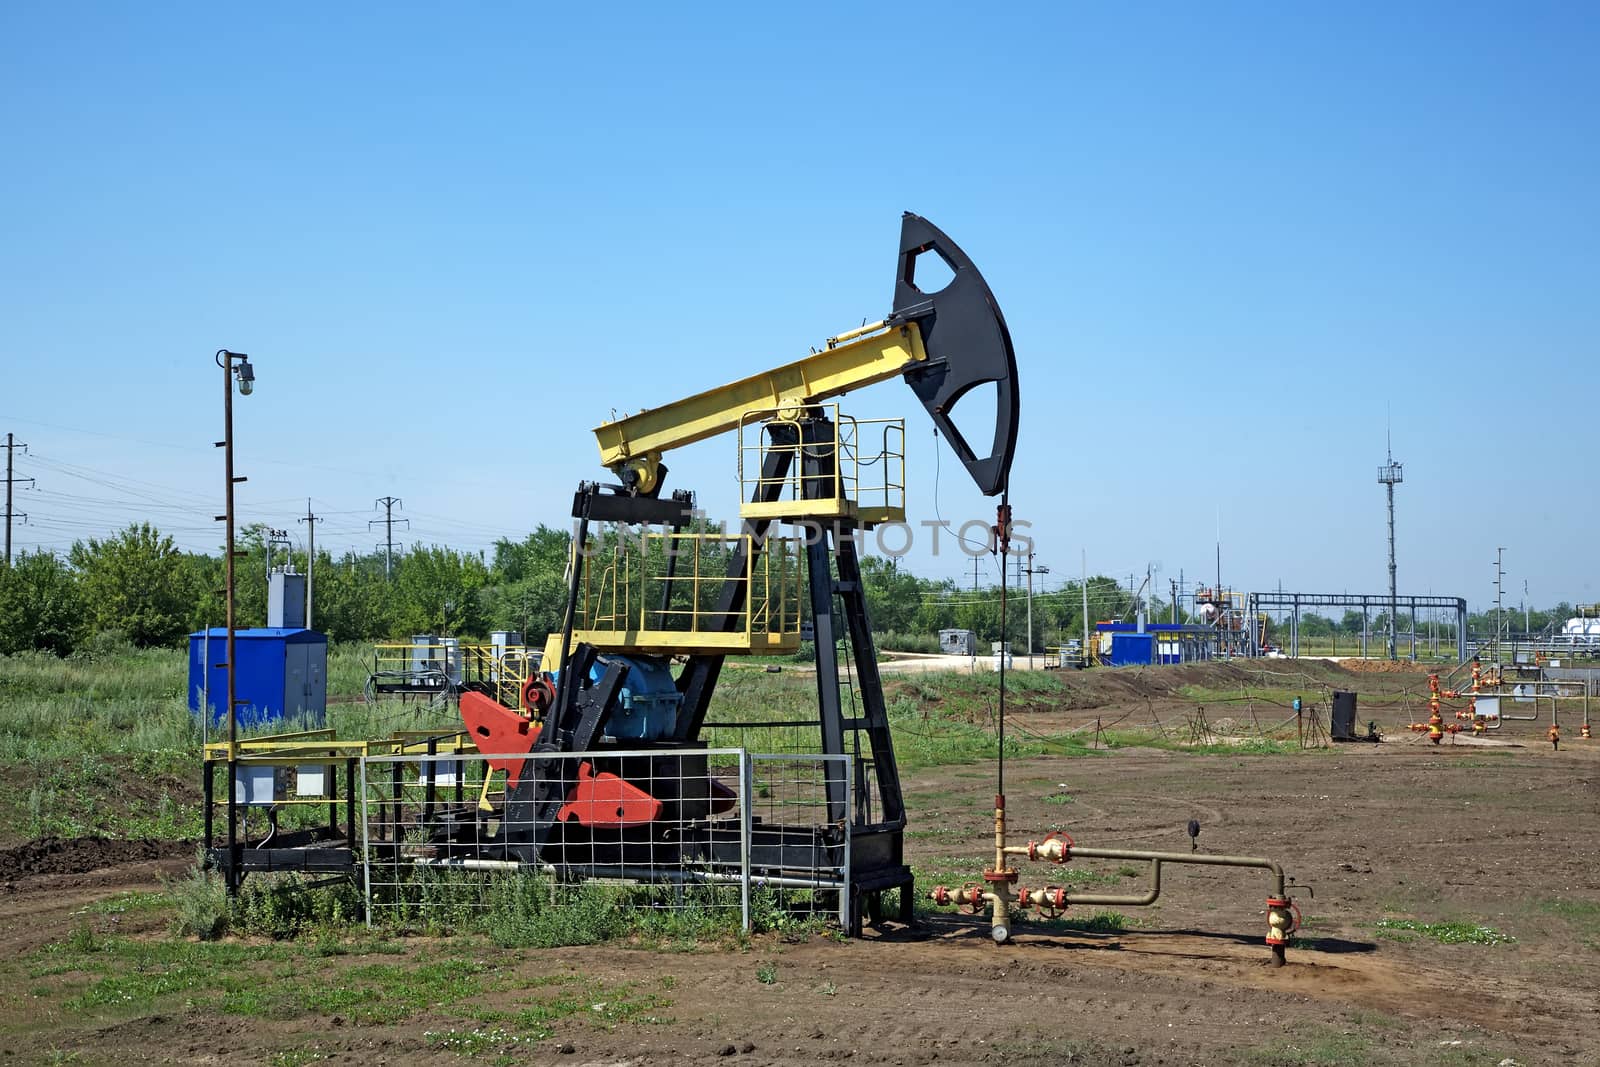  Work of oil pump jack on a oil field